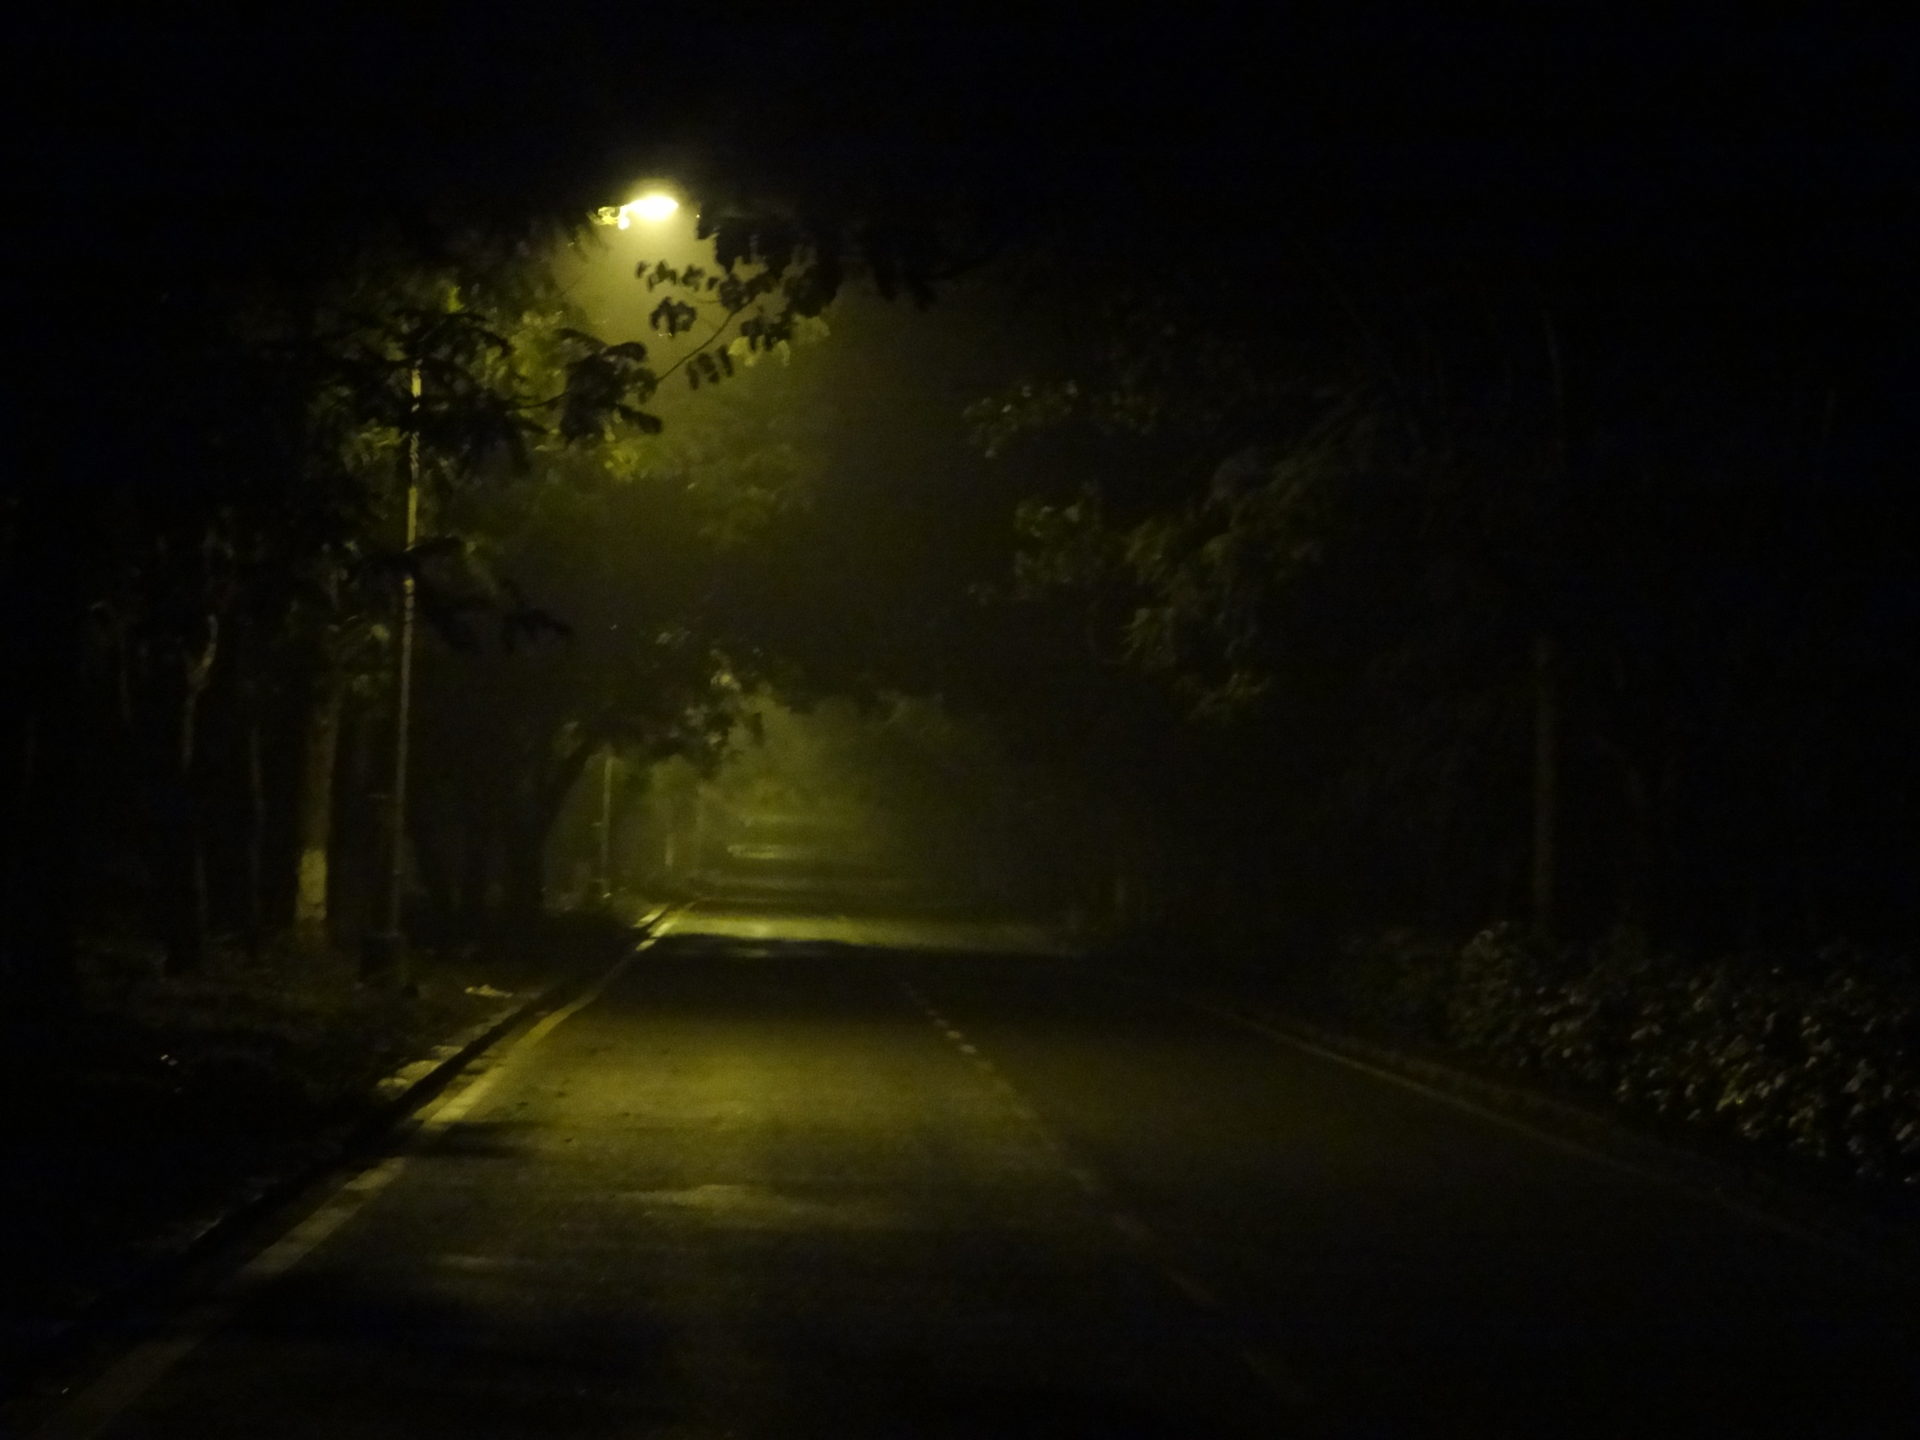 A haunted street scene